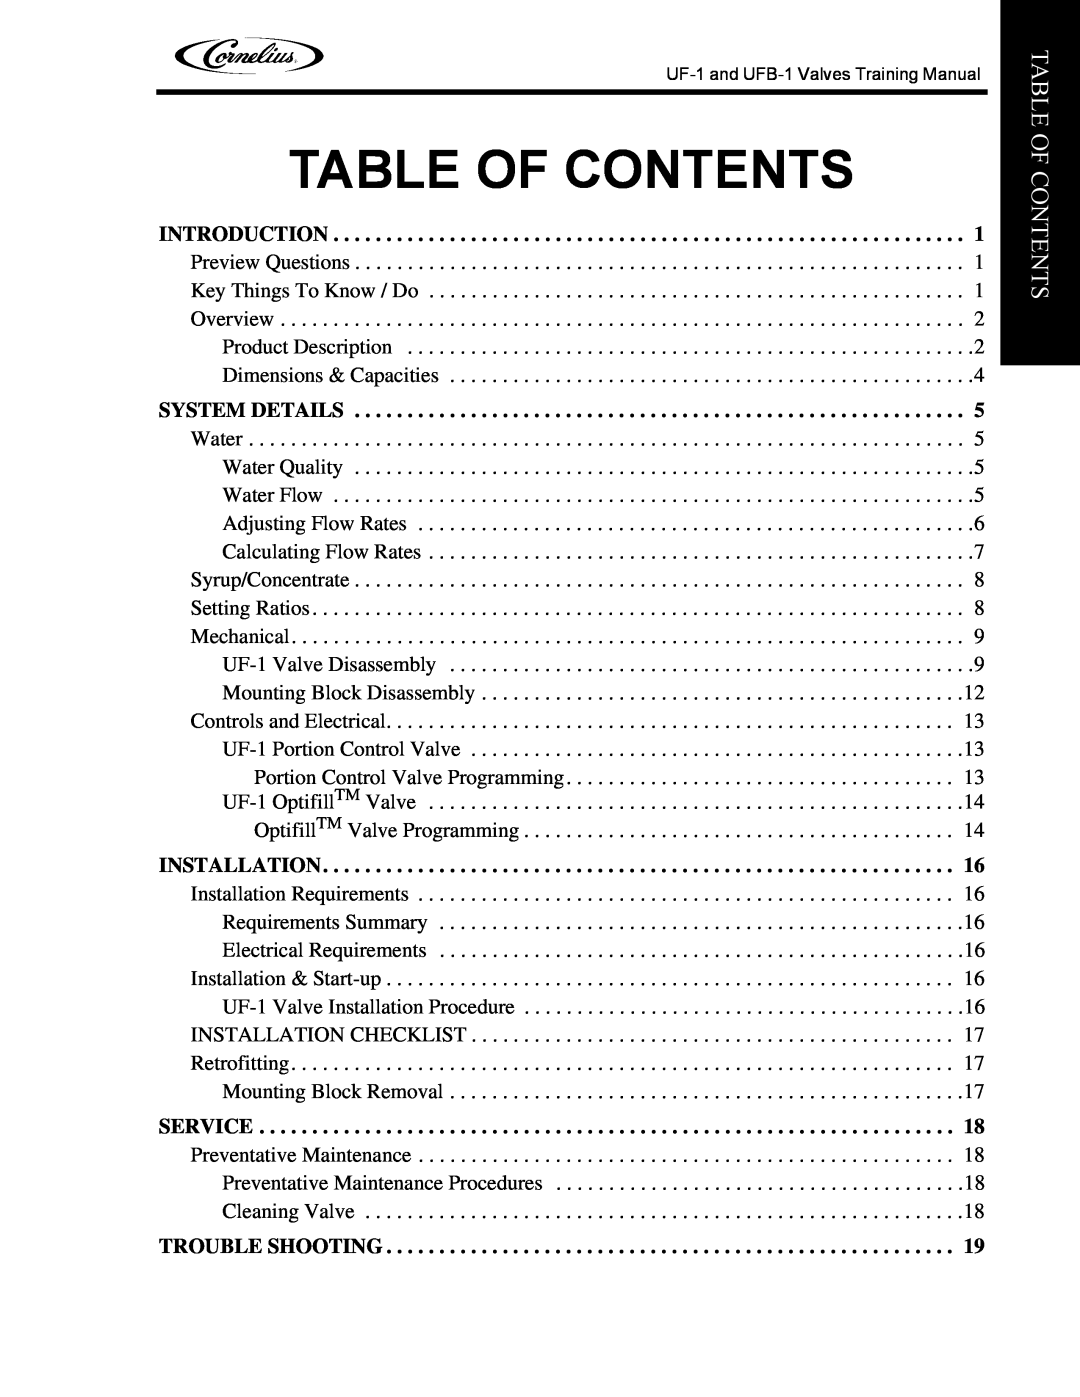 Cornelius UF-1, UFB-1 manual Table Of Contents 